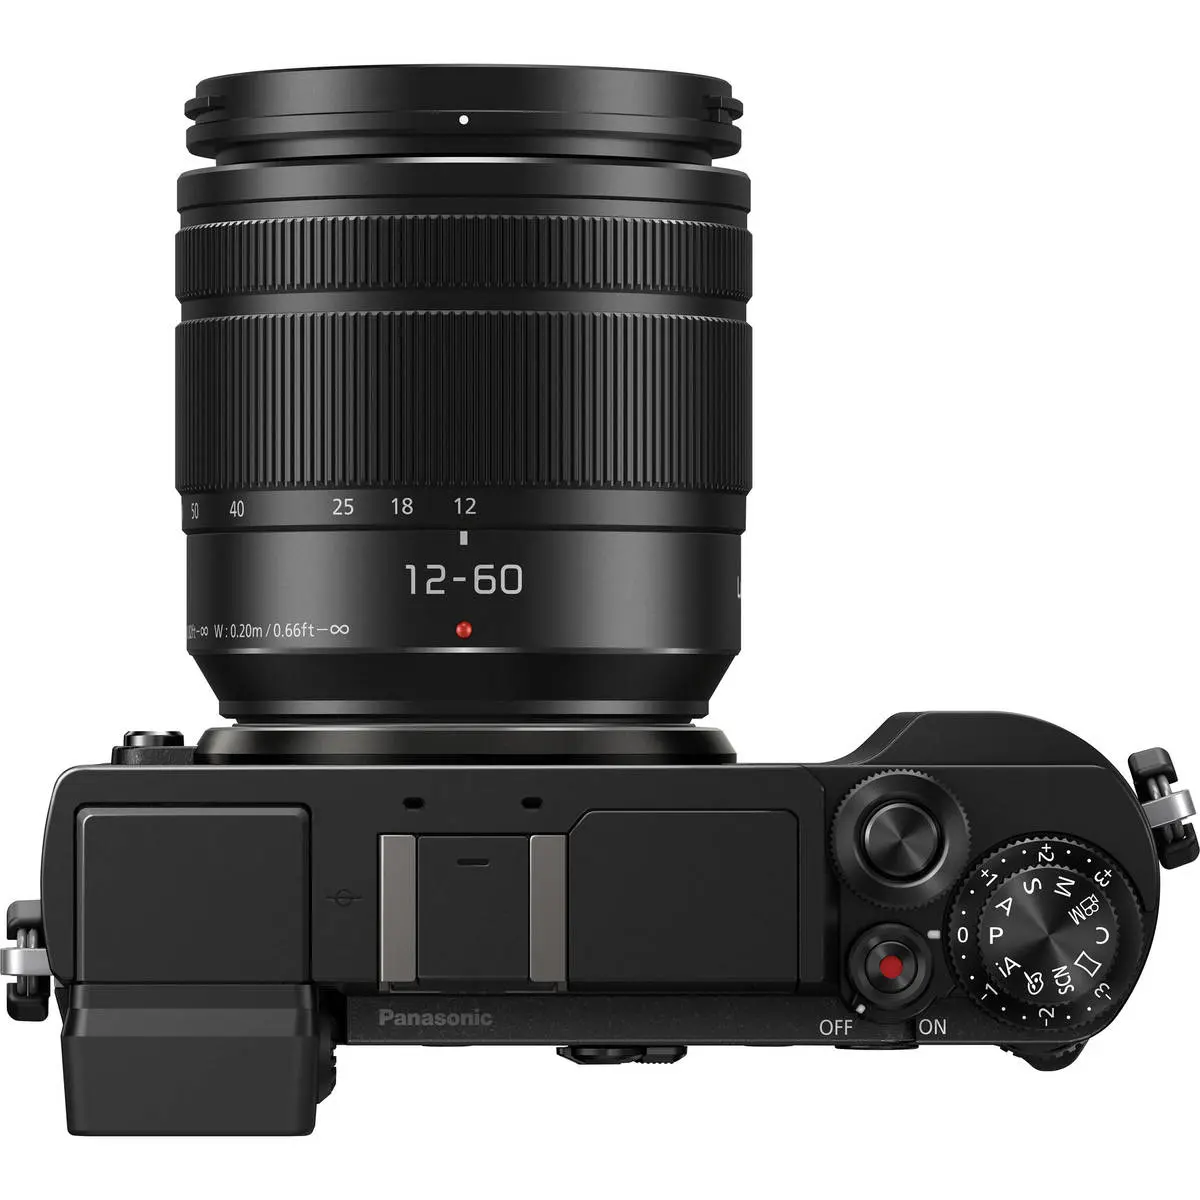 2. Panasonic Lumix DC-G9 kit (12-60 F3.5-5.6) Camera